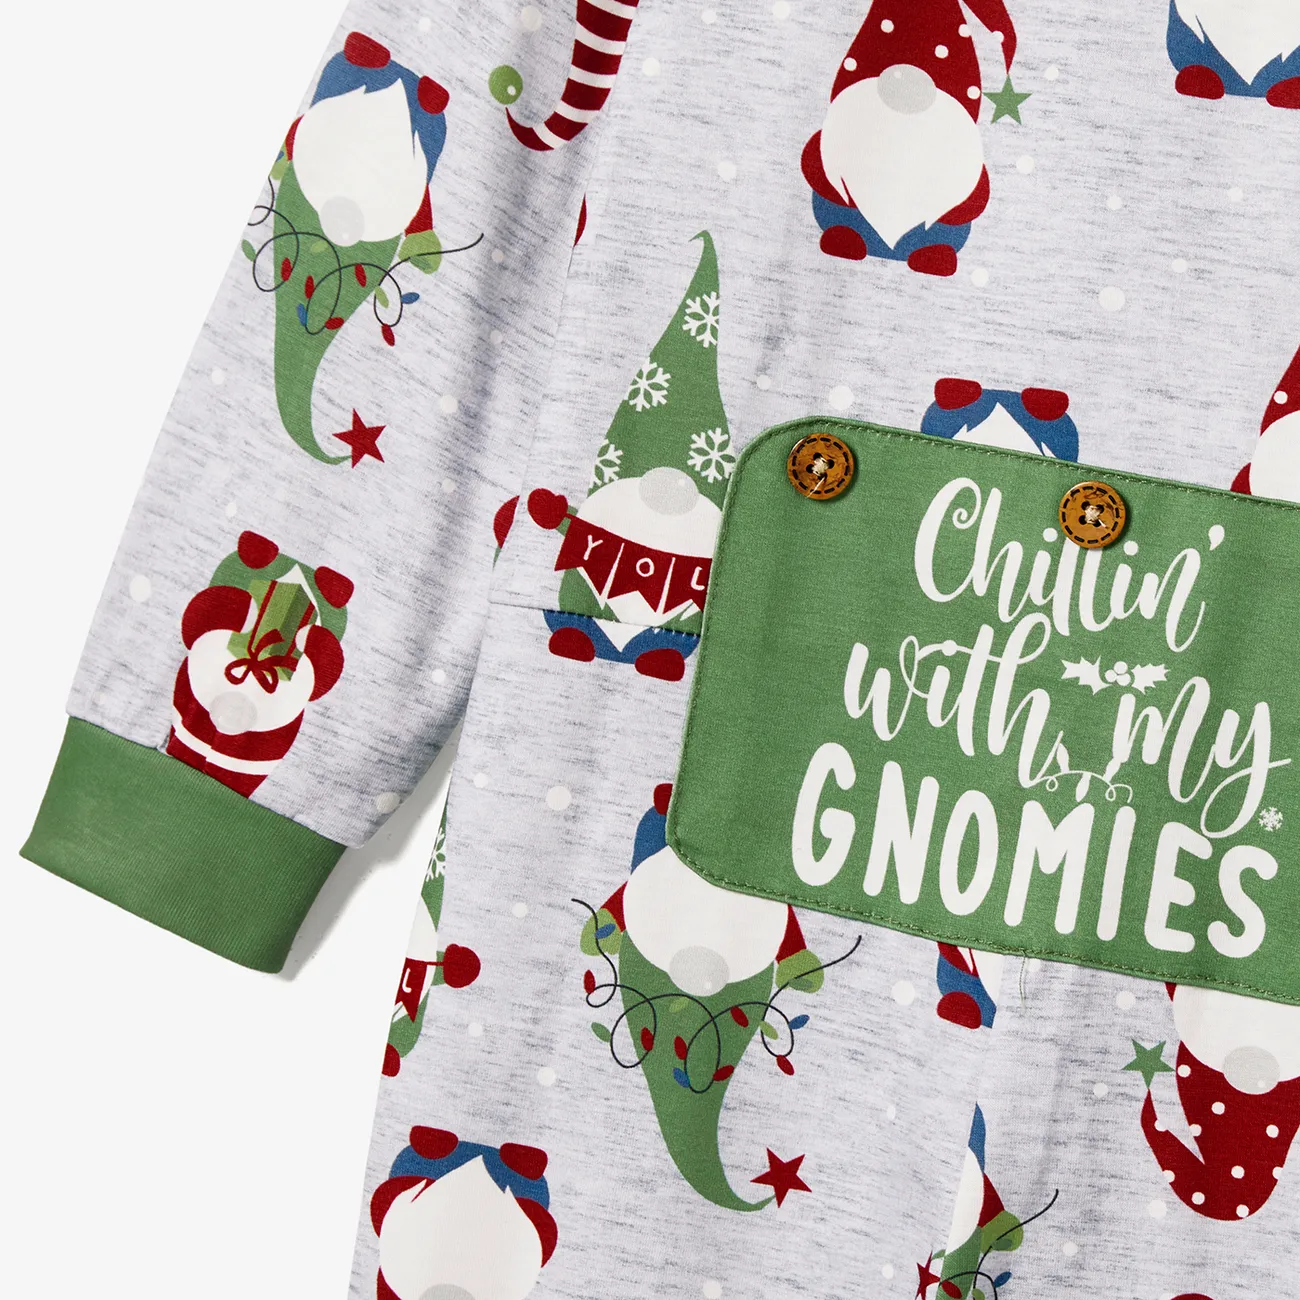 Navidad Looks familiares Manga larga Conjuntos combinados para familia Pijamas (Flame Resistant) Verde big image 1